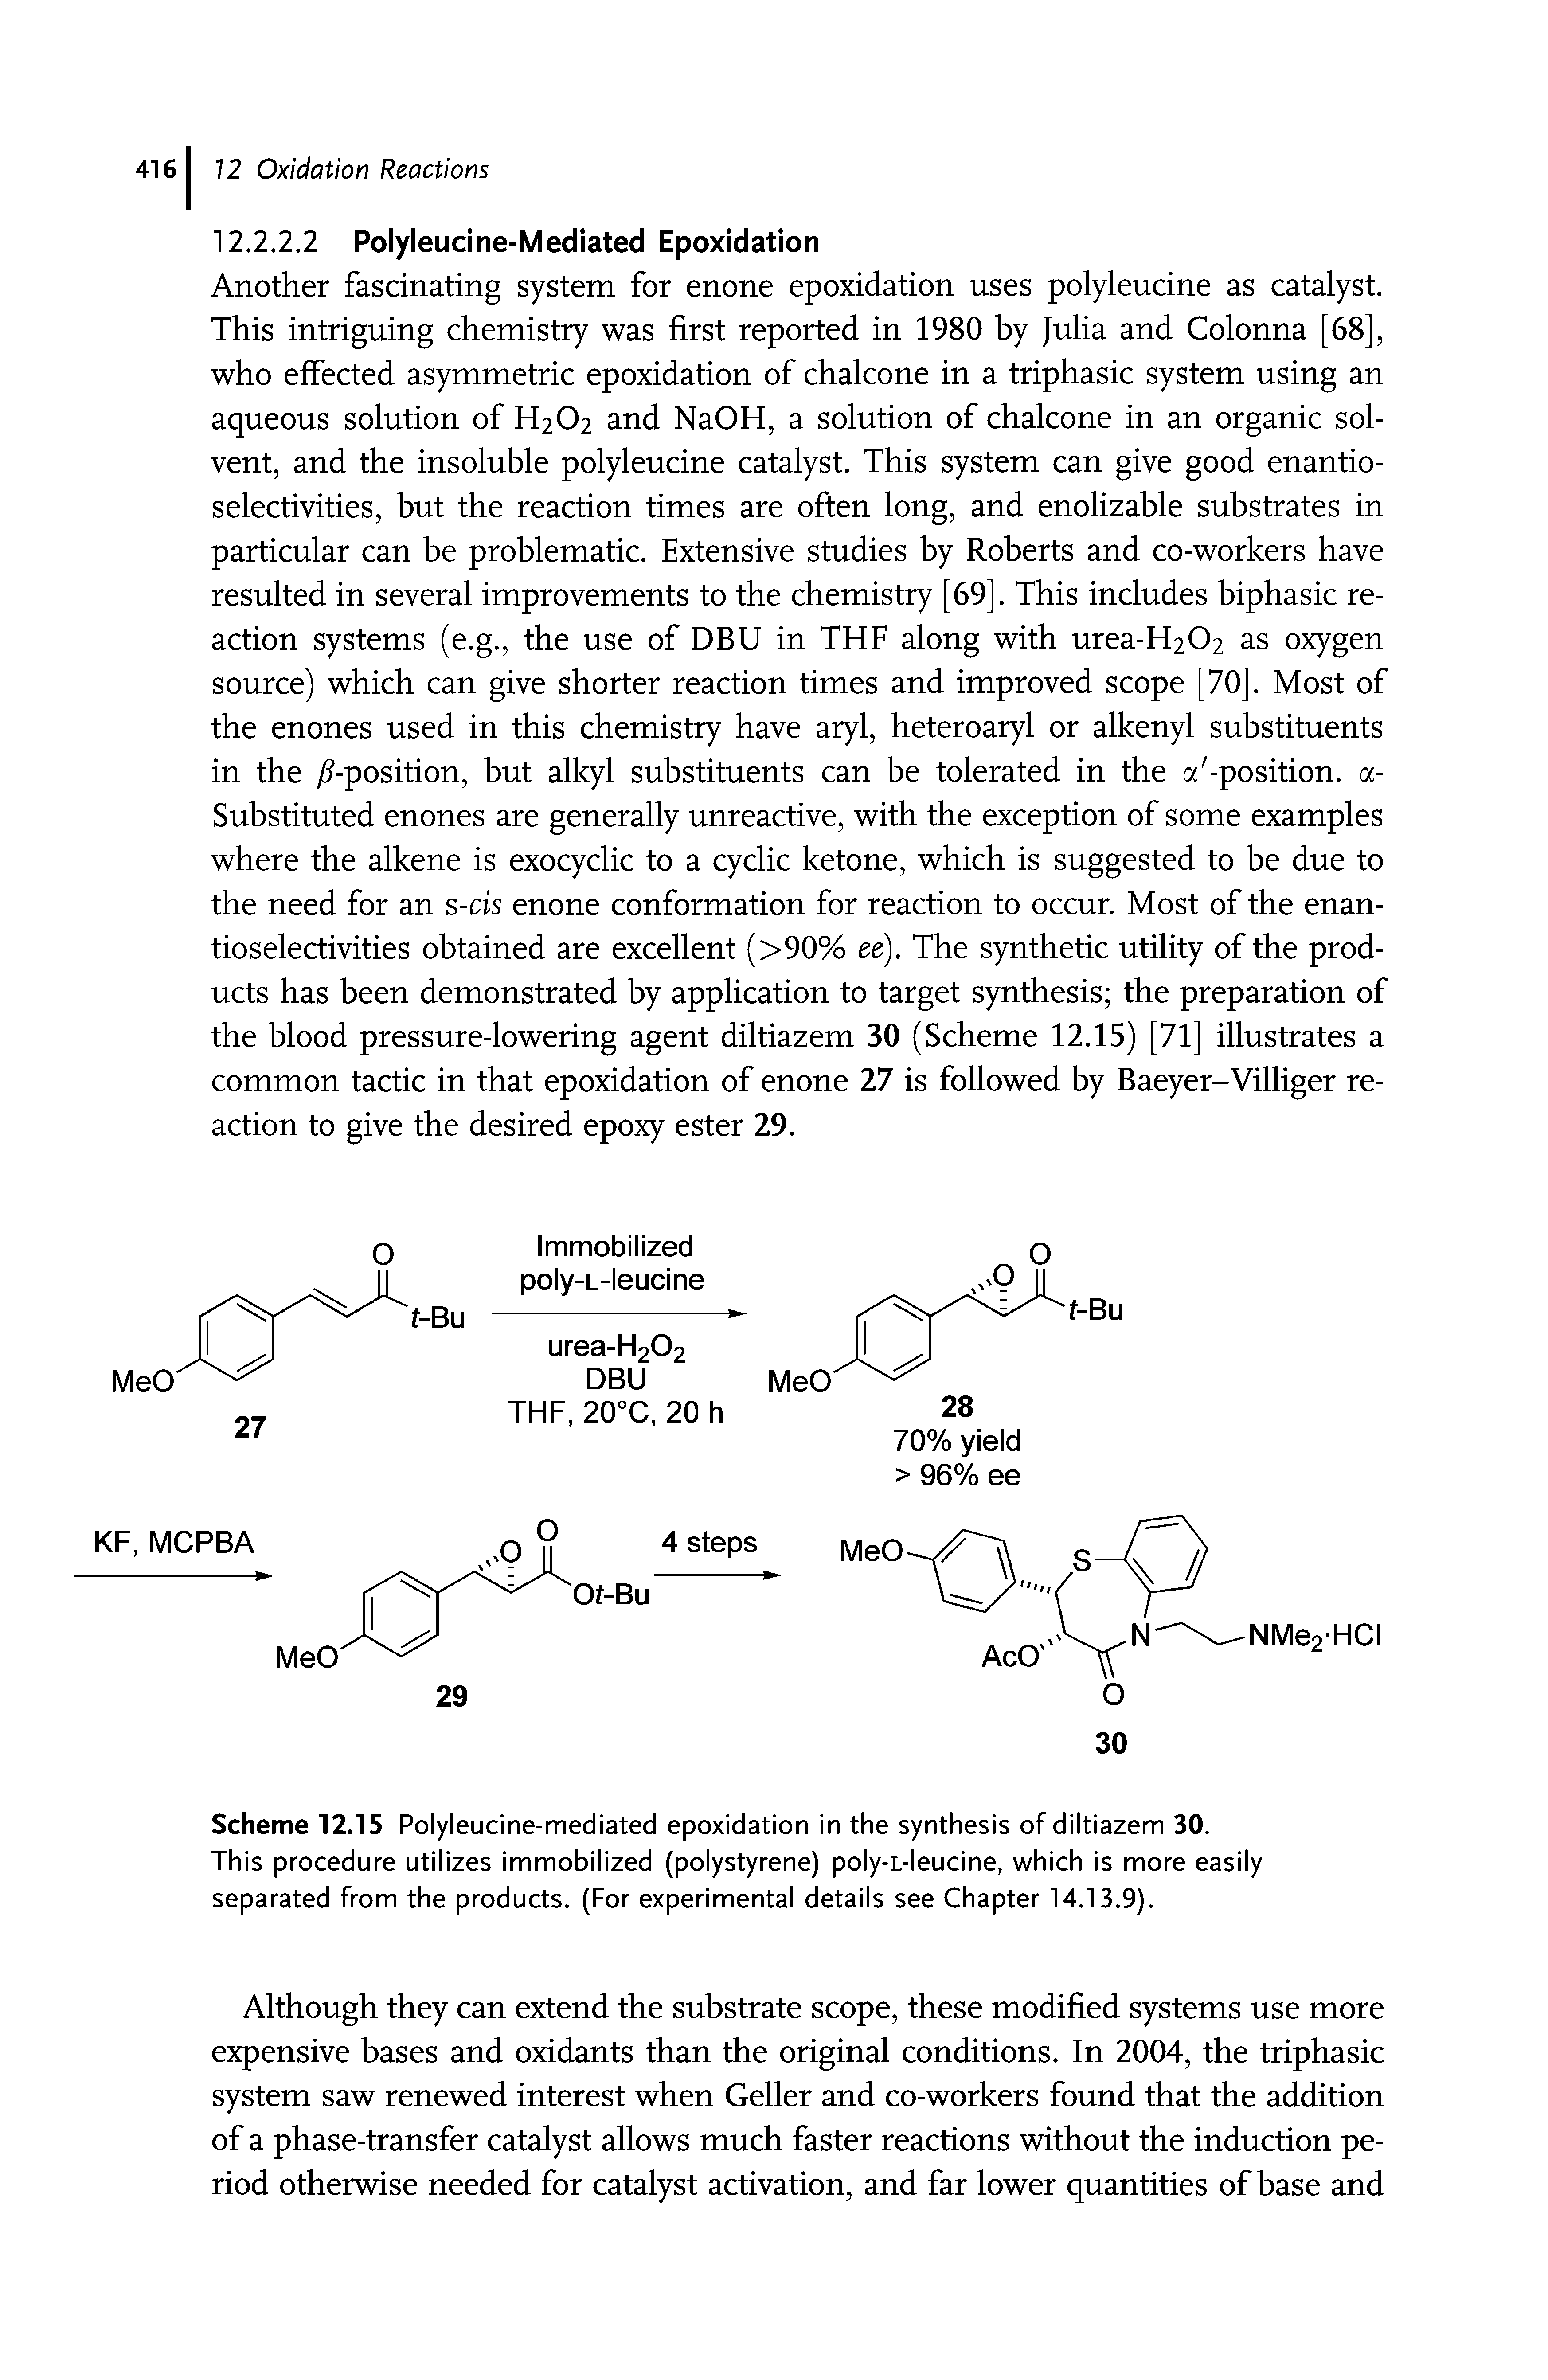 Scheme 12.15 Polyleucine-mediated epoxidation in the synthesis of diltiazem 30.